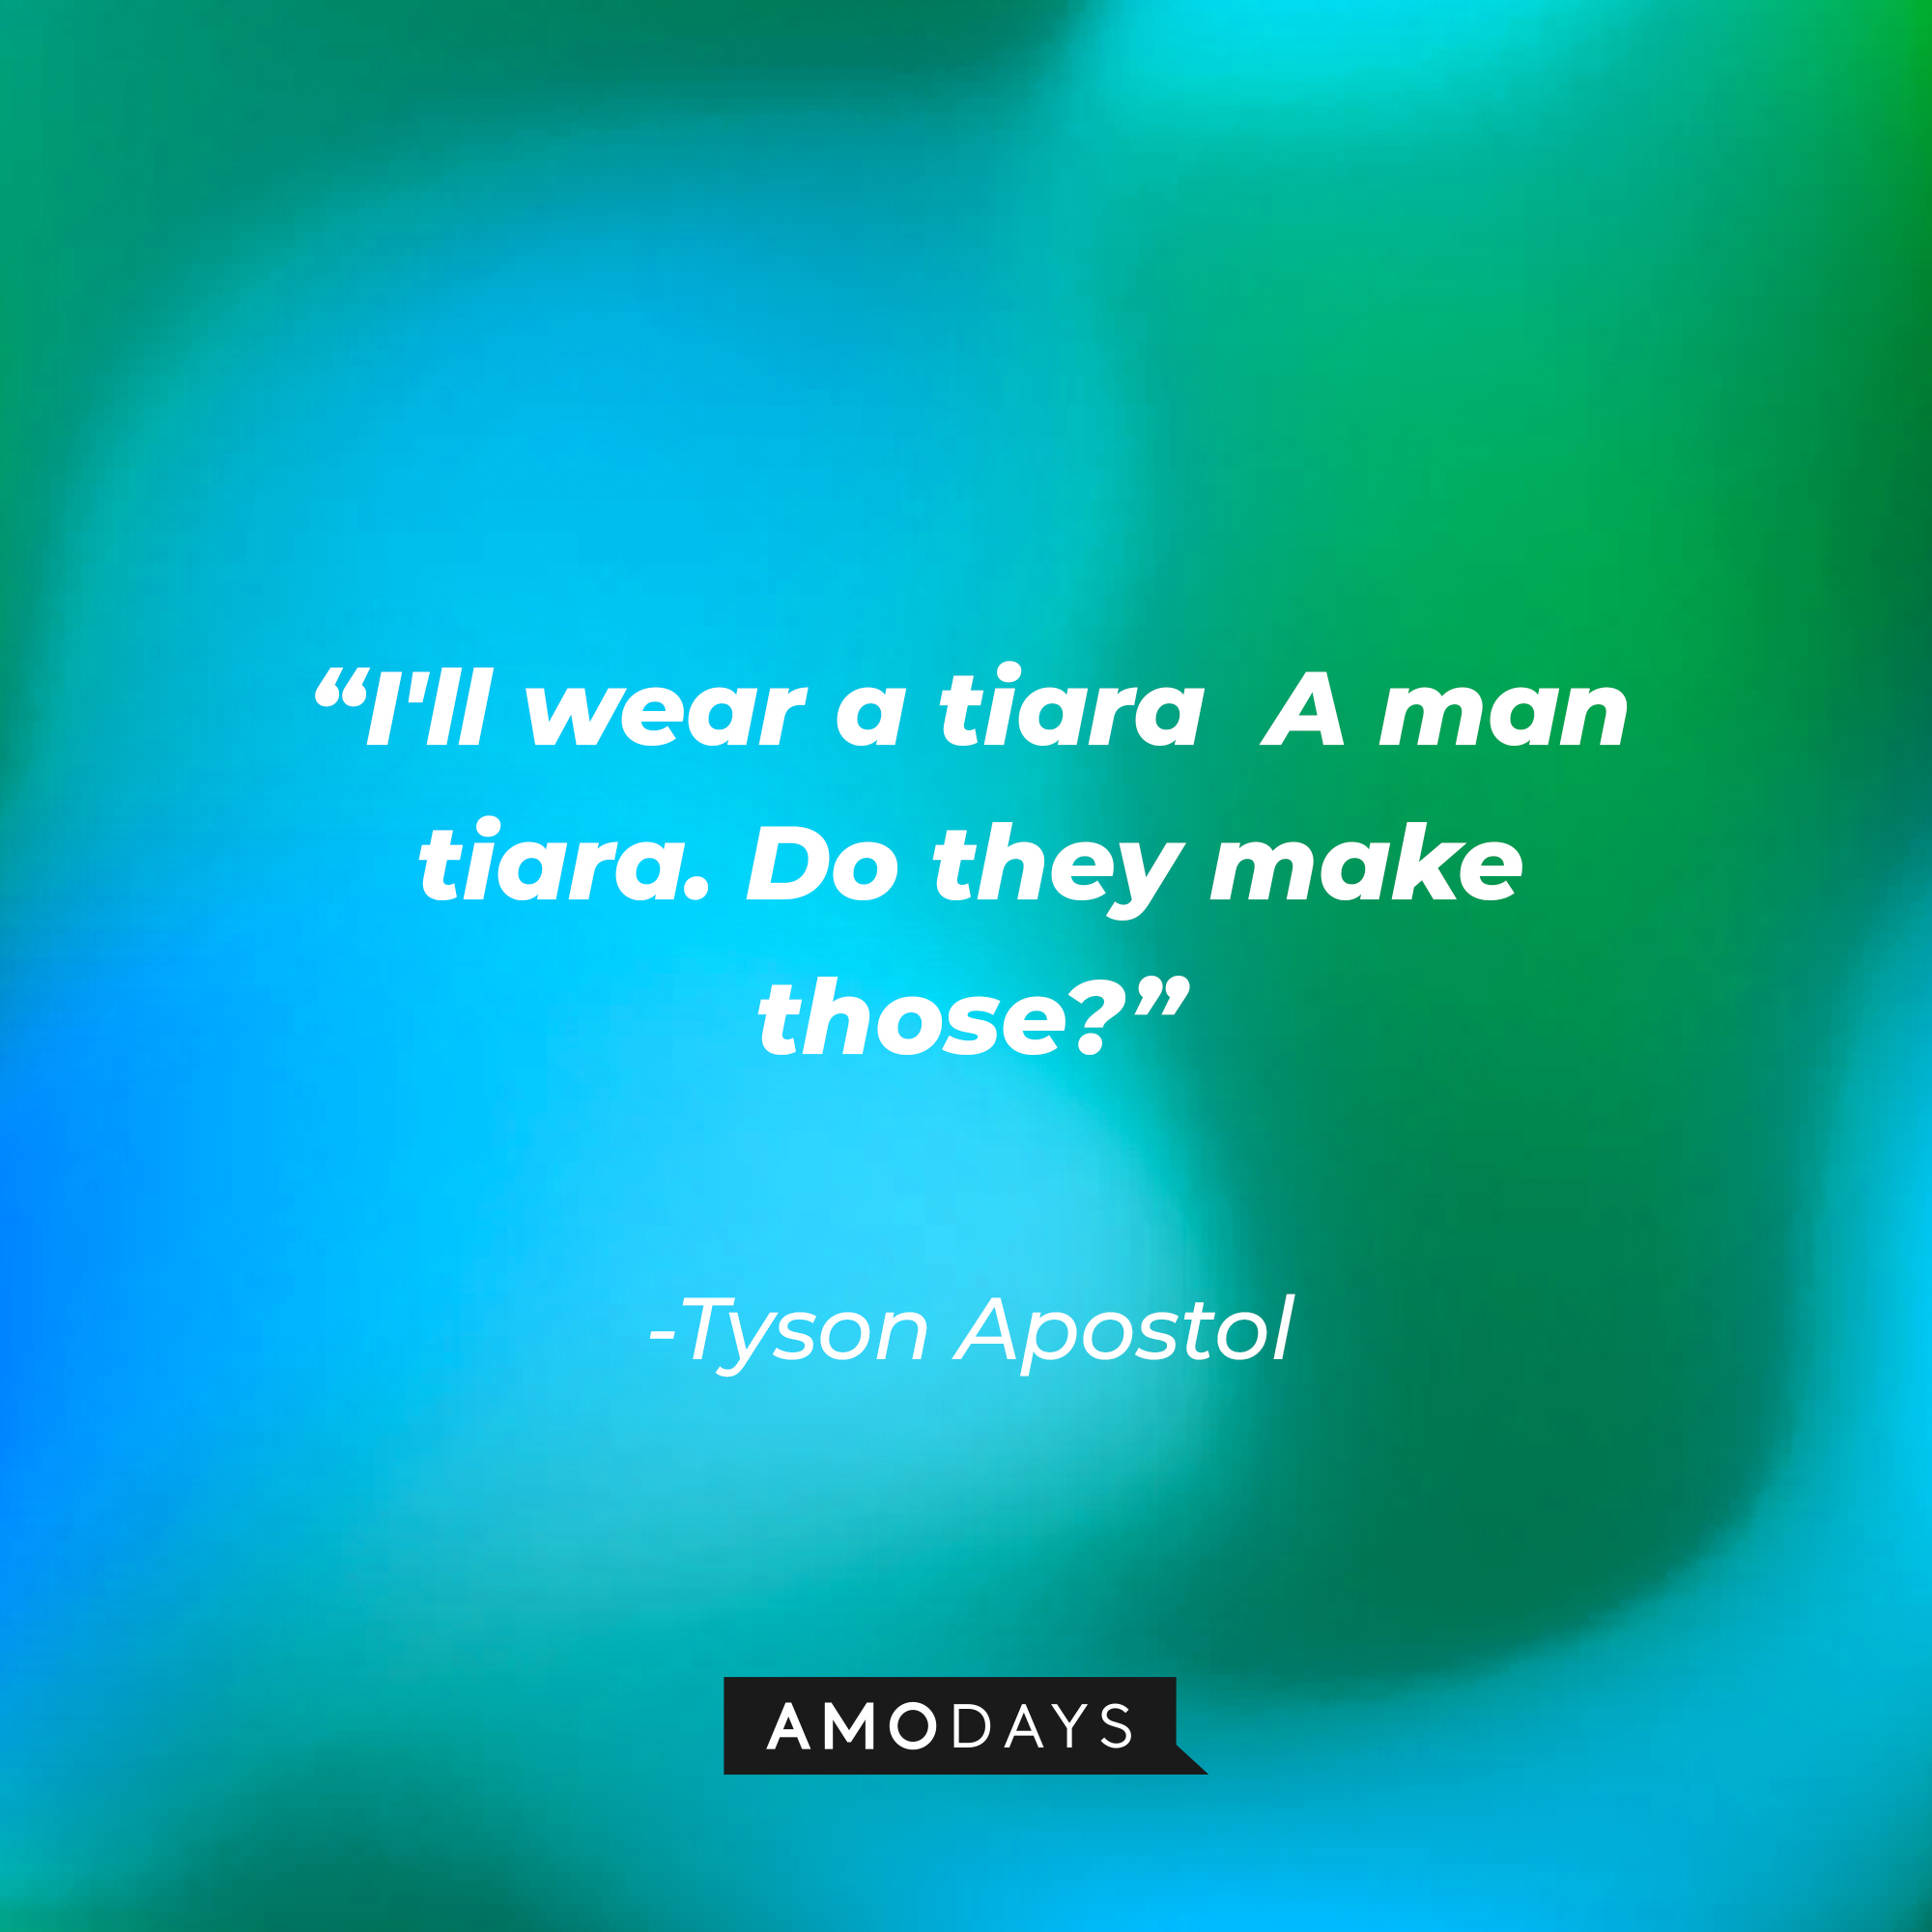 Tyson Apostol’s quote:“I'll wear a tiara  A man tiara. Do they make those?" │ Source: AmoDays